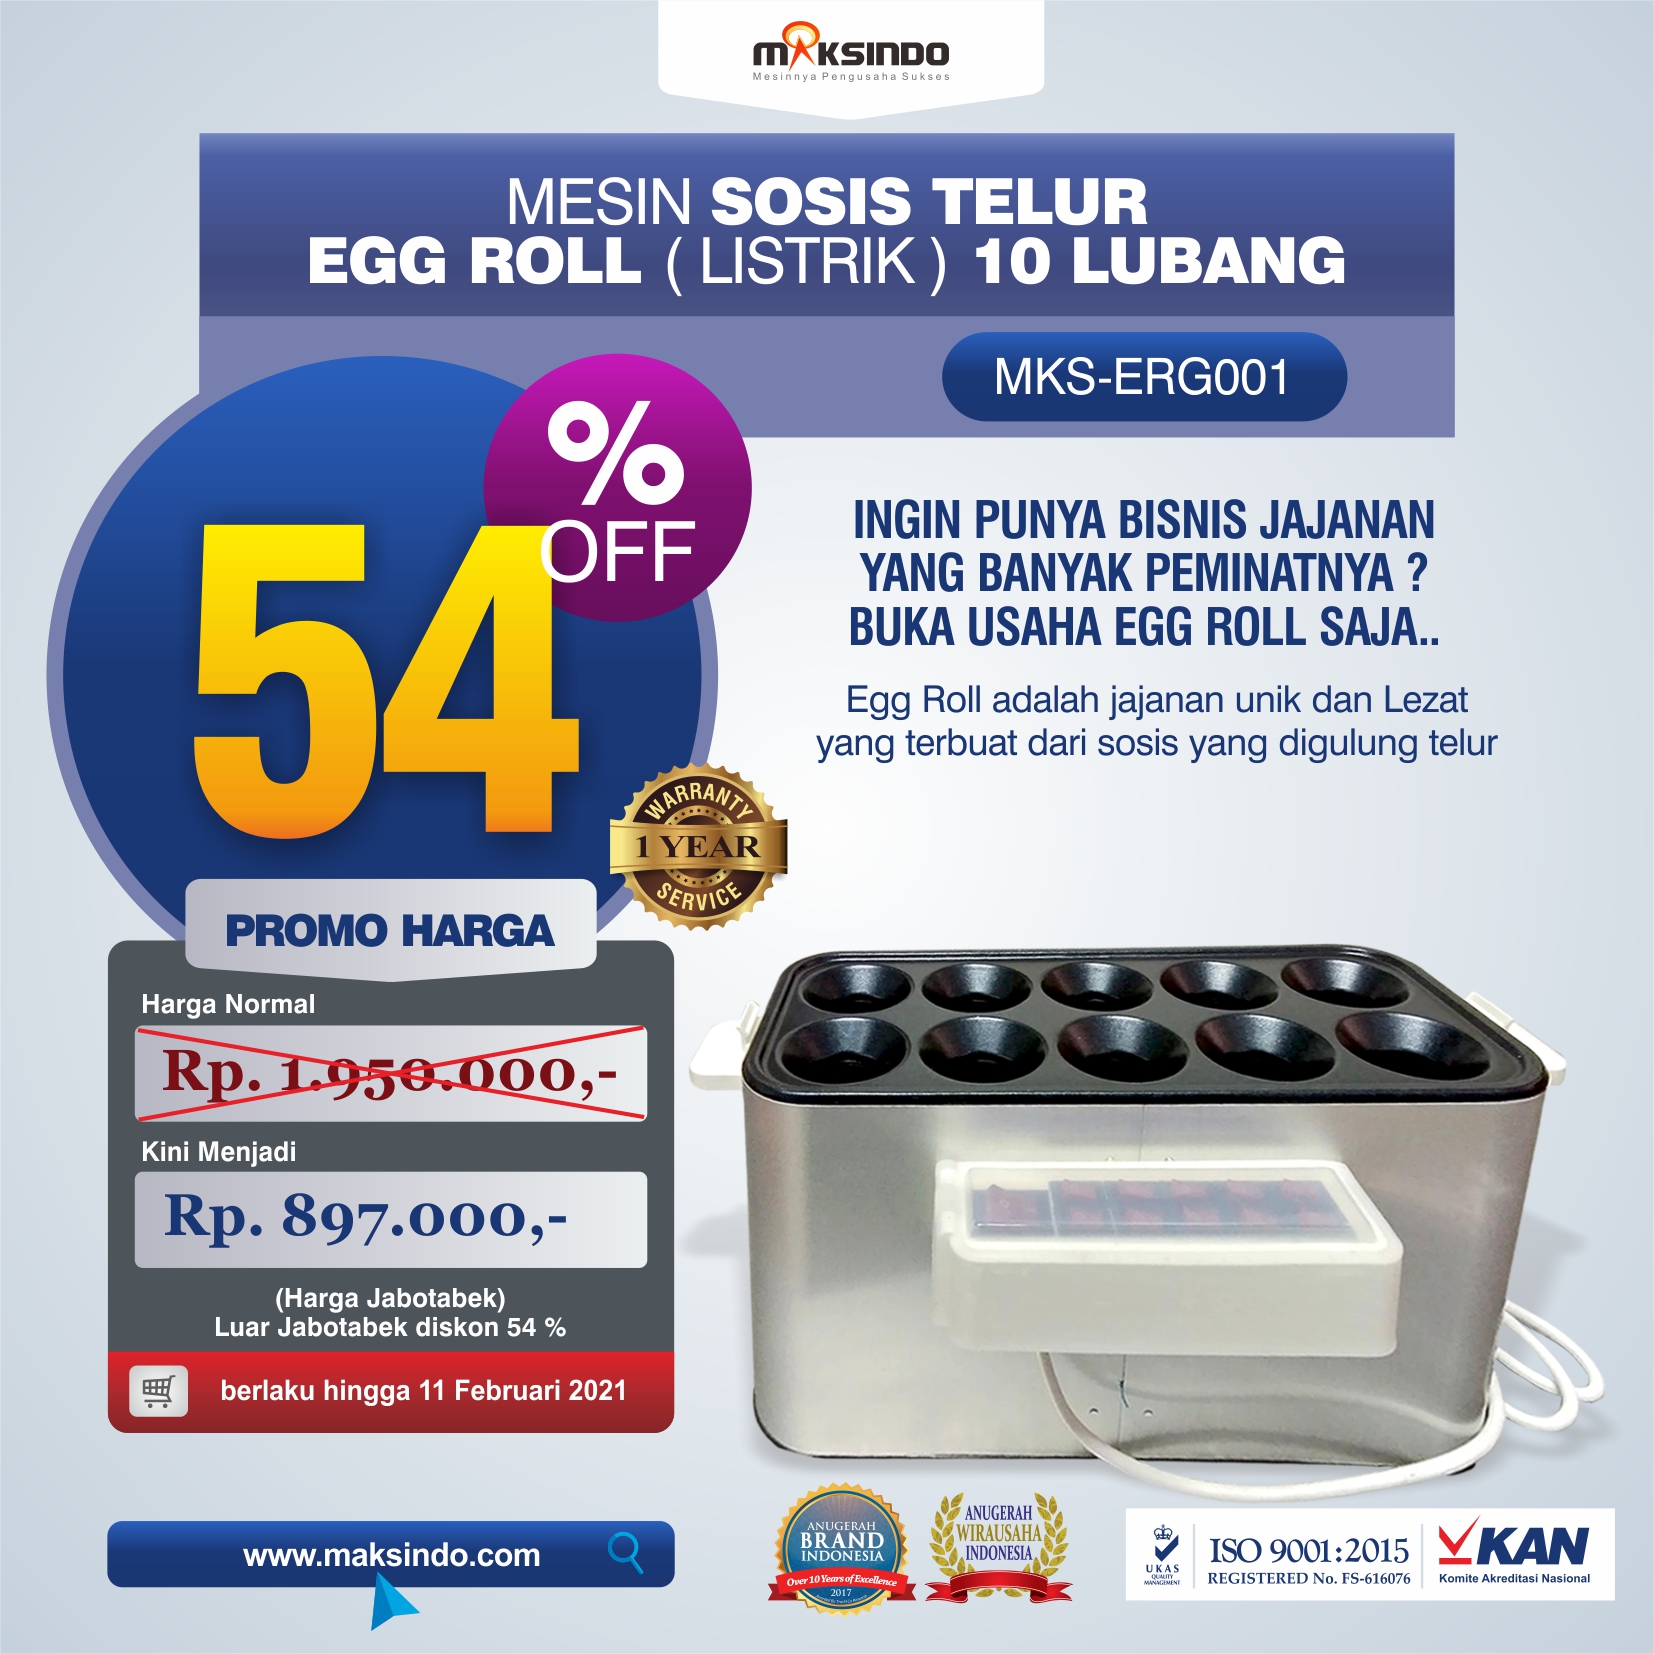 Mesin Pembuat Egg Roll (Listrik) MKS-ERG001